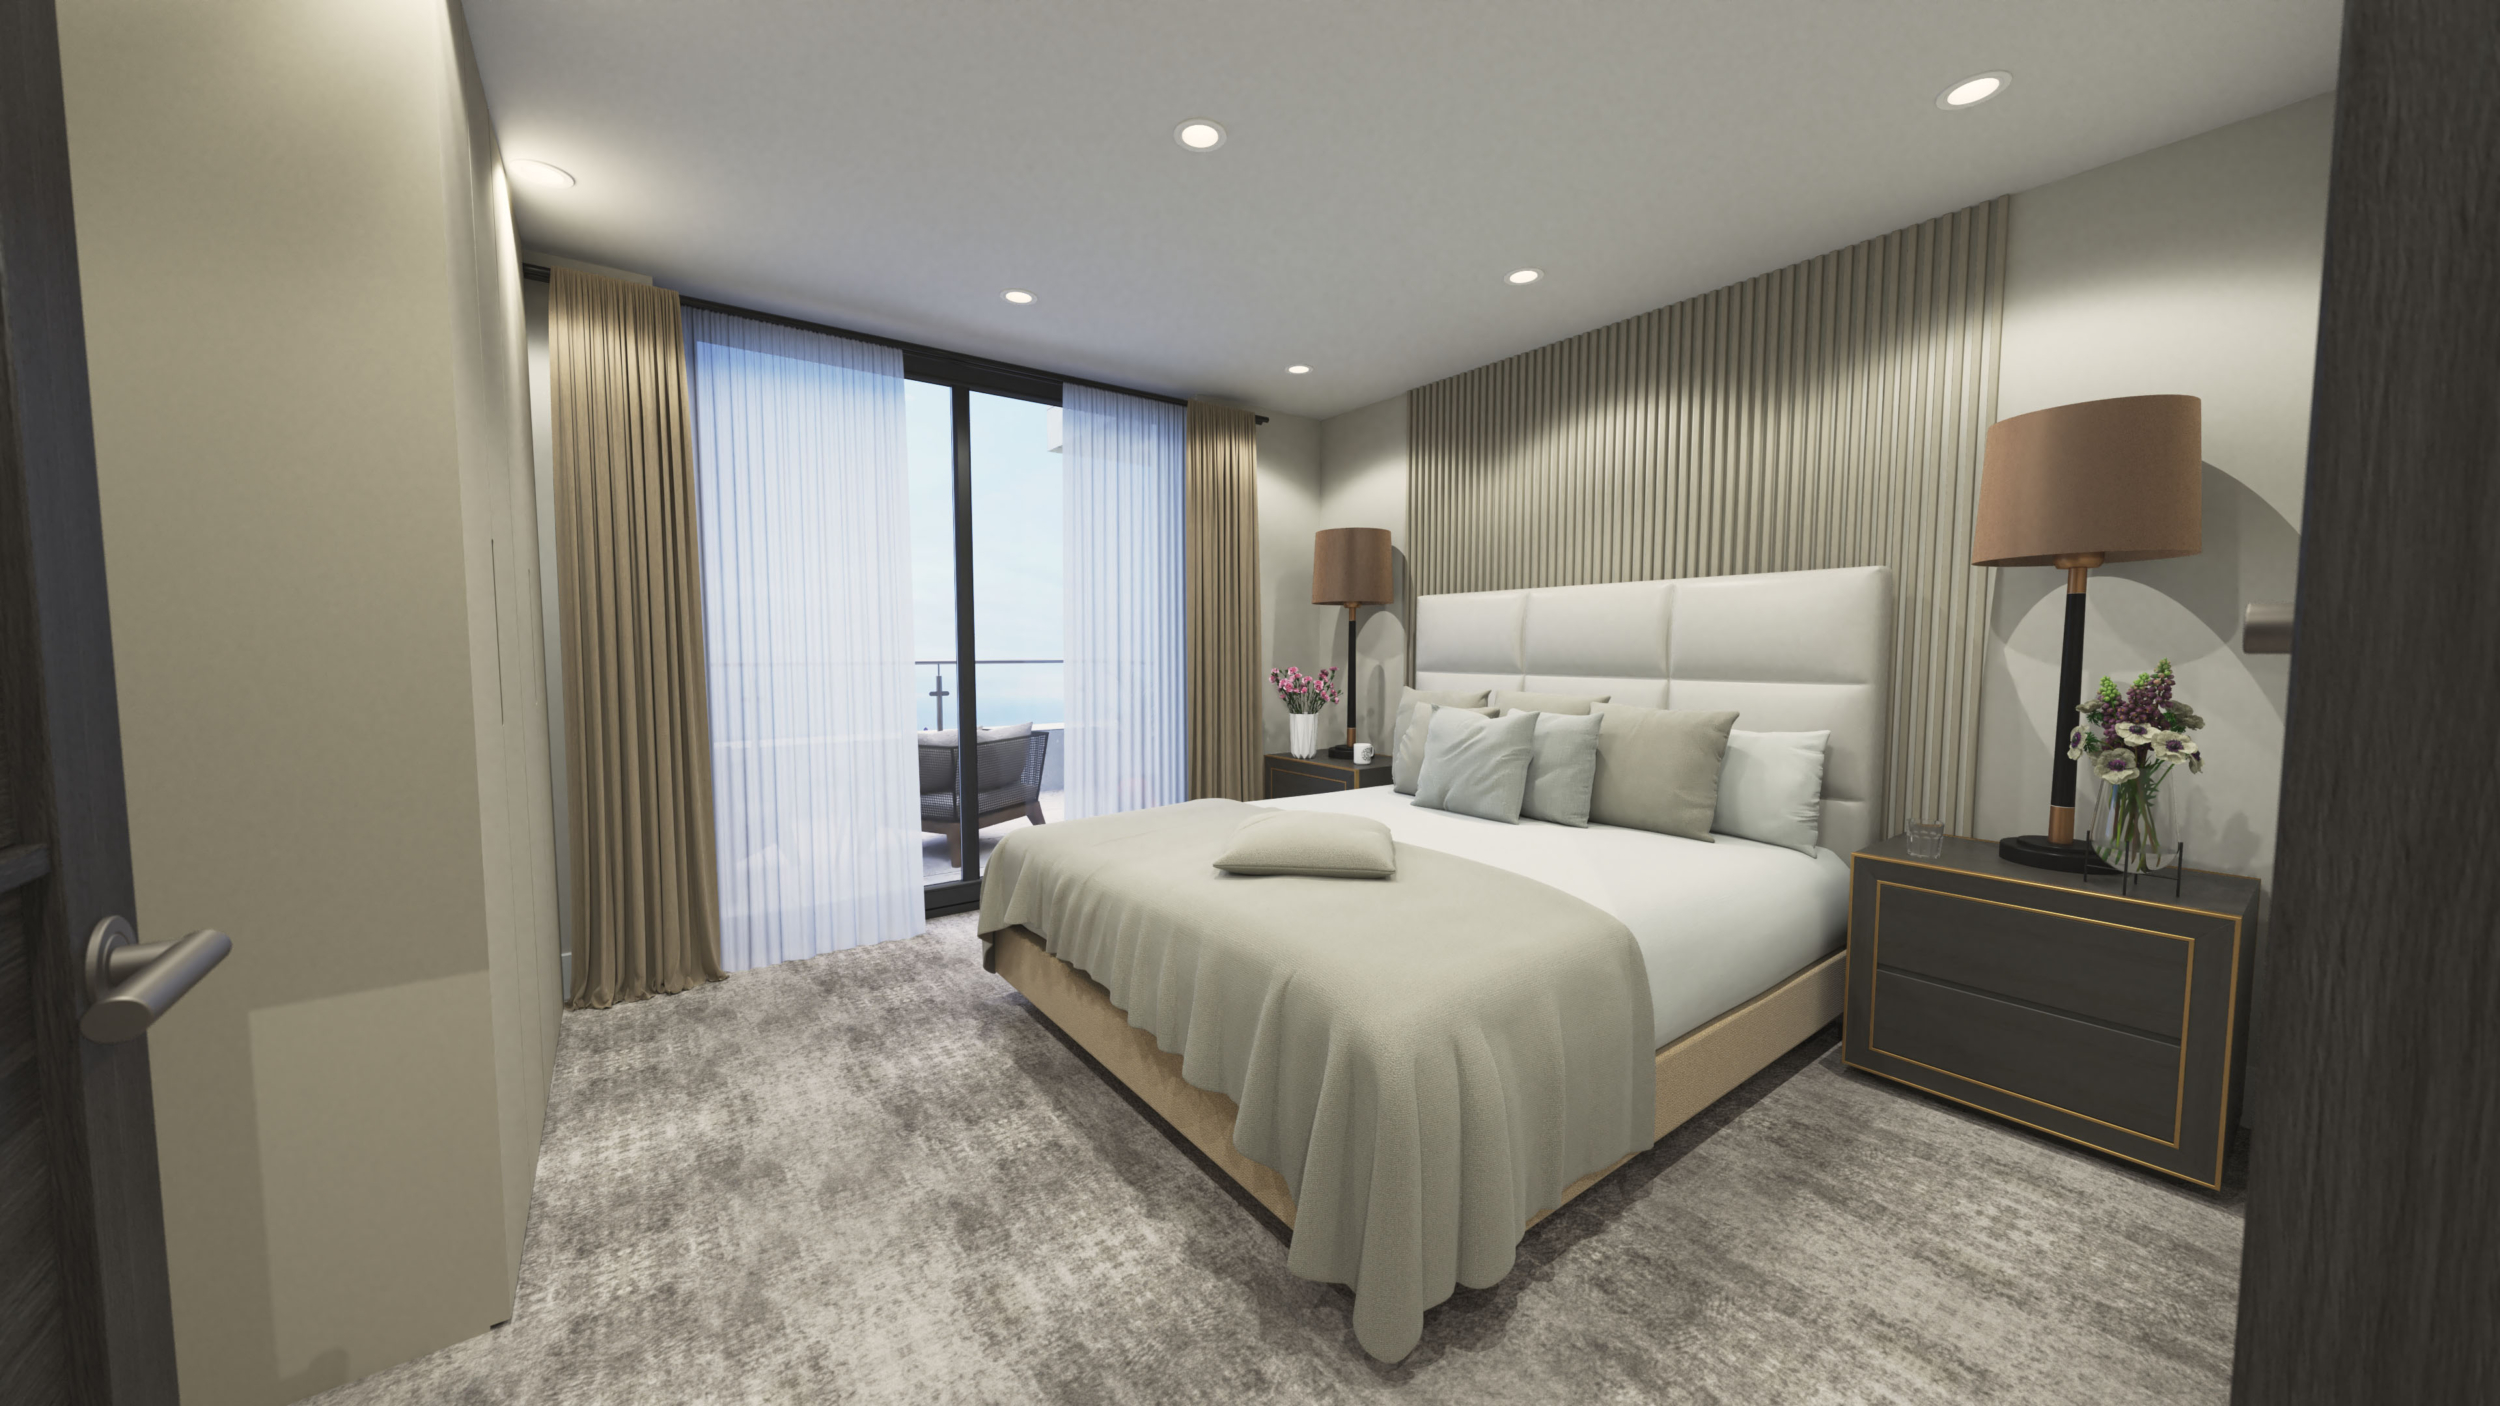 Luxury Penthouse Apartment, Bedroom CGI, Linear CGI Studio